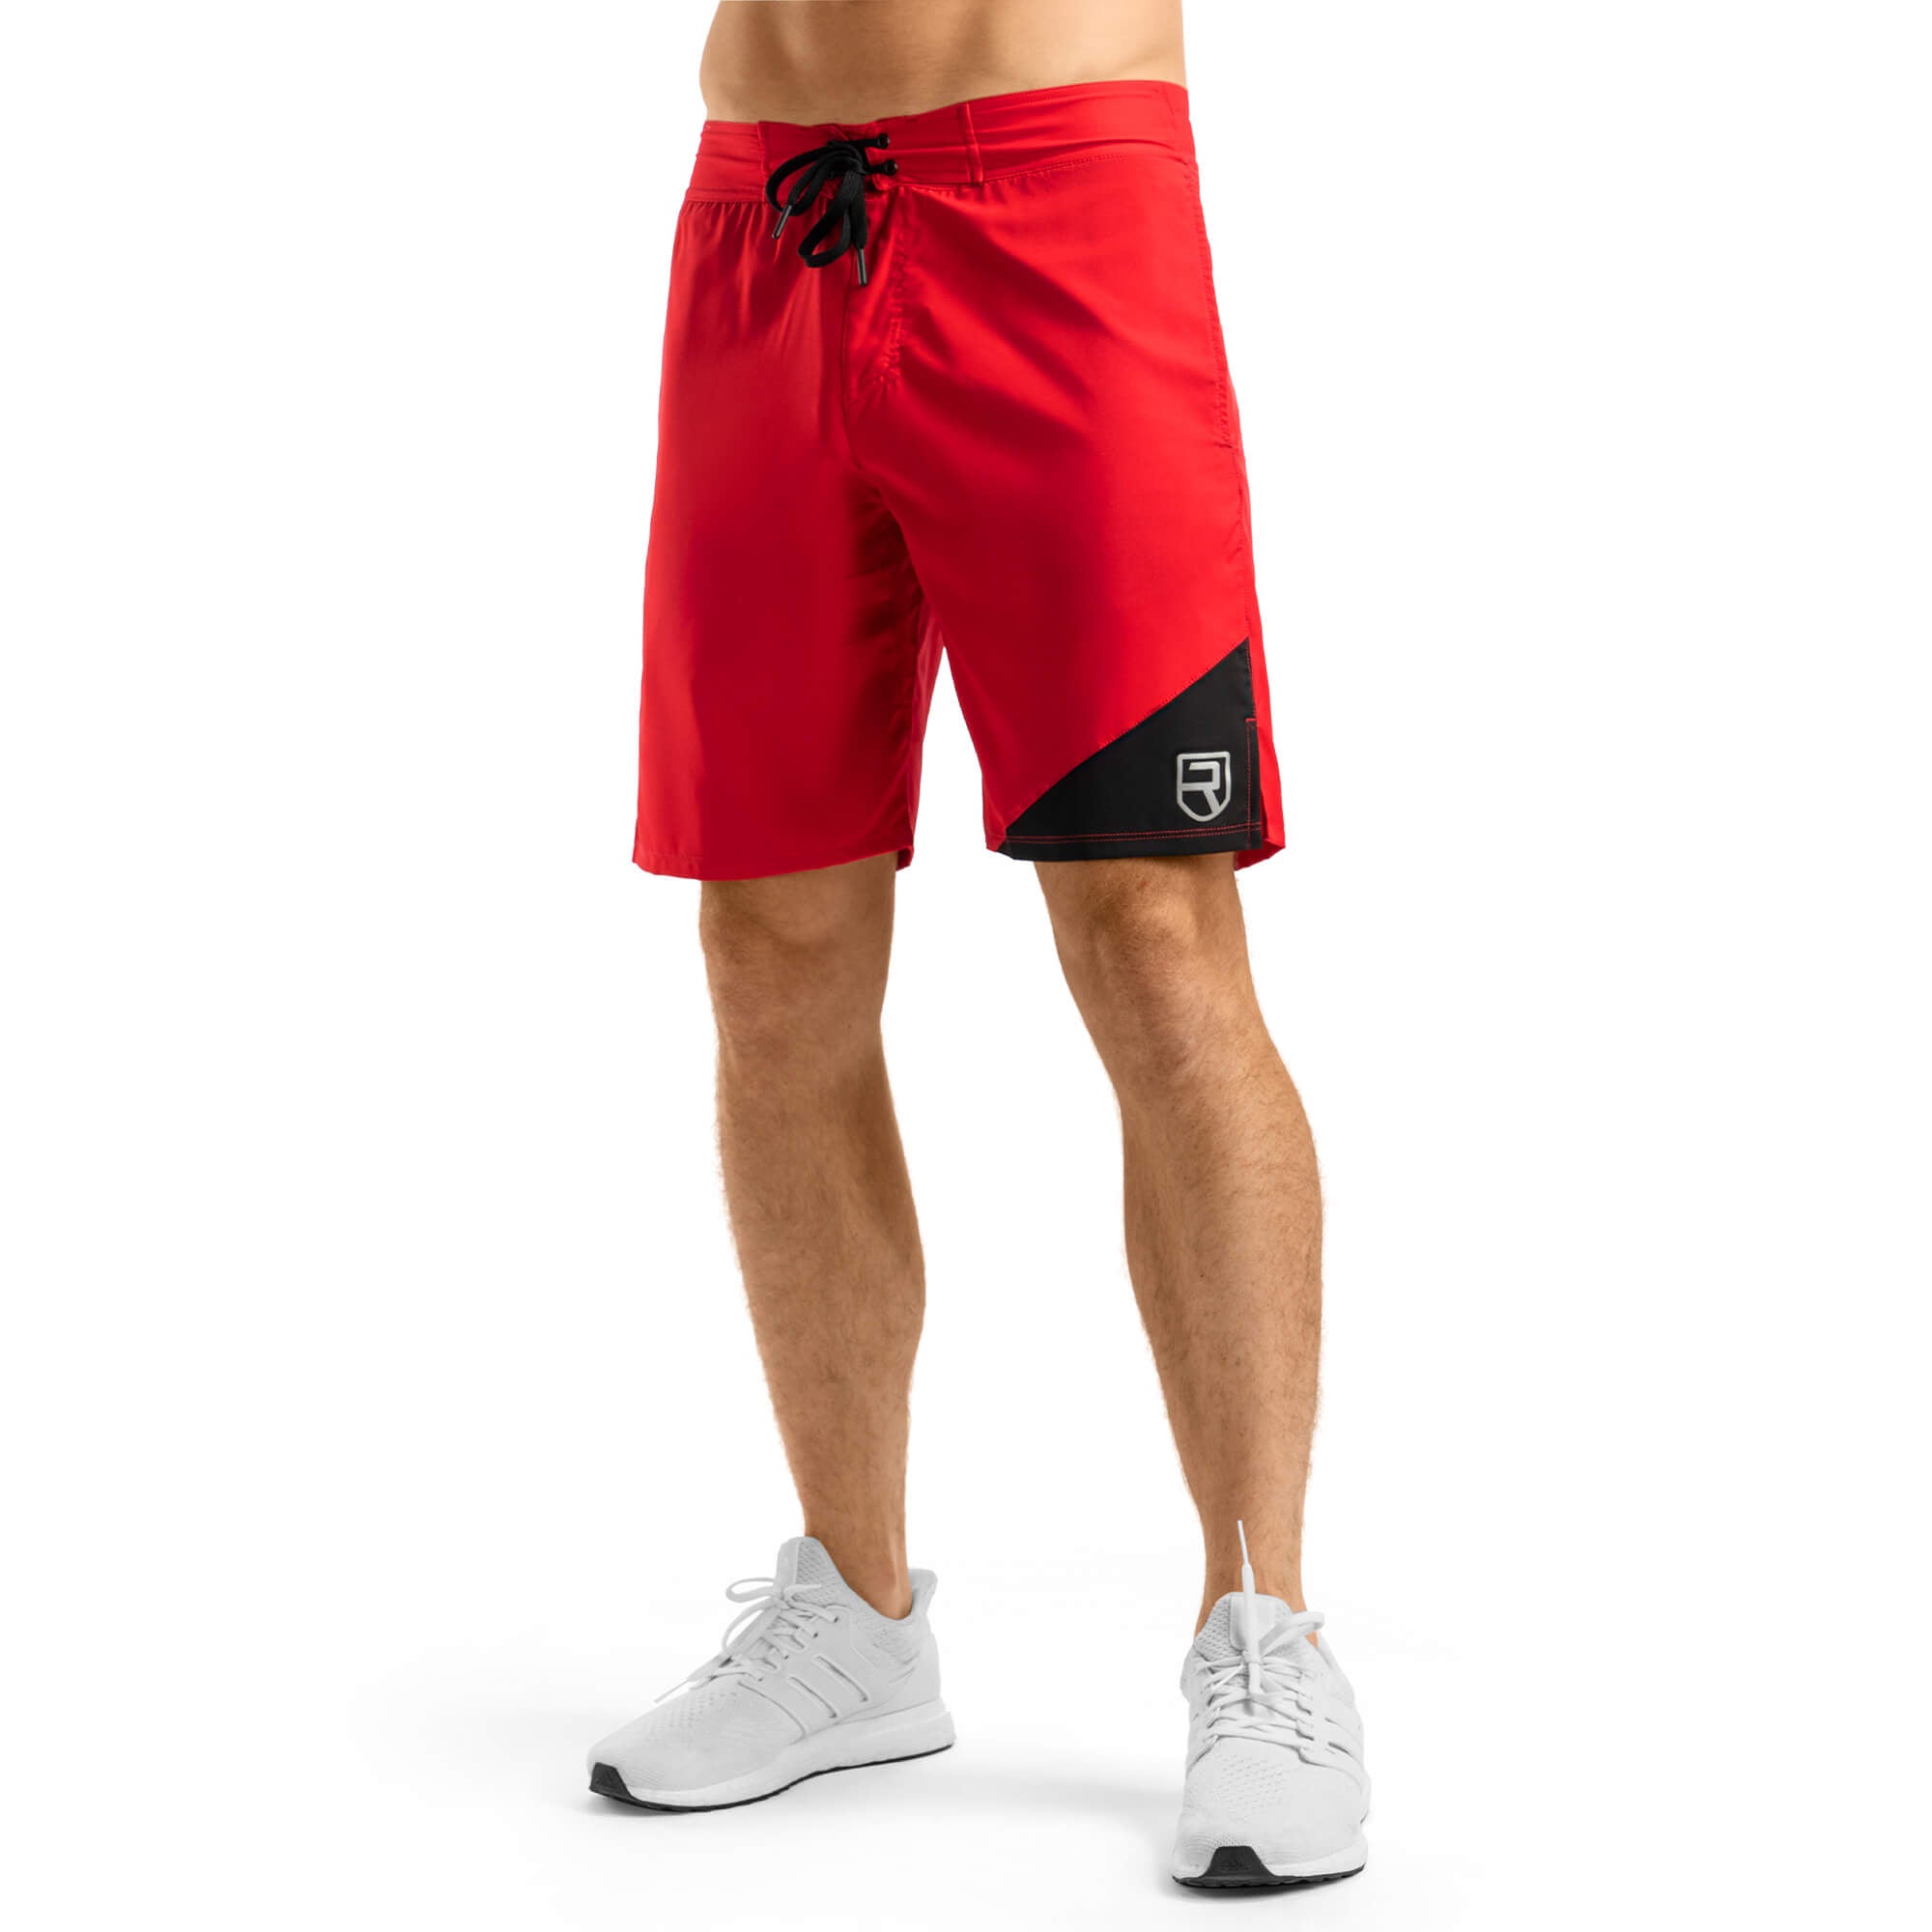 Zenith Shorts 9" – Red